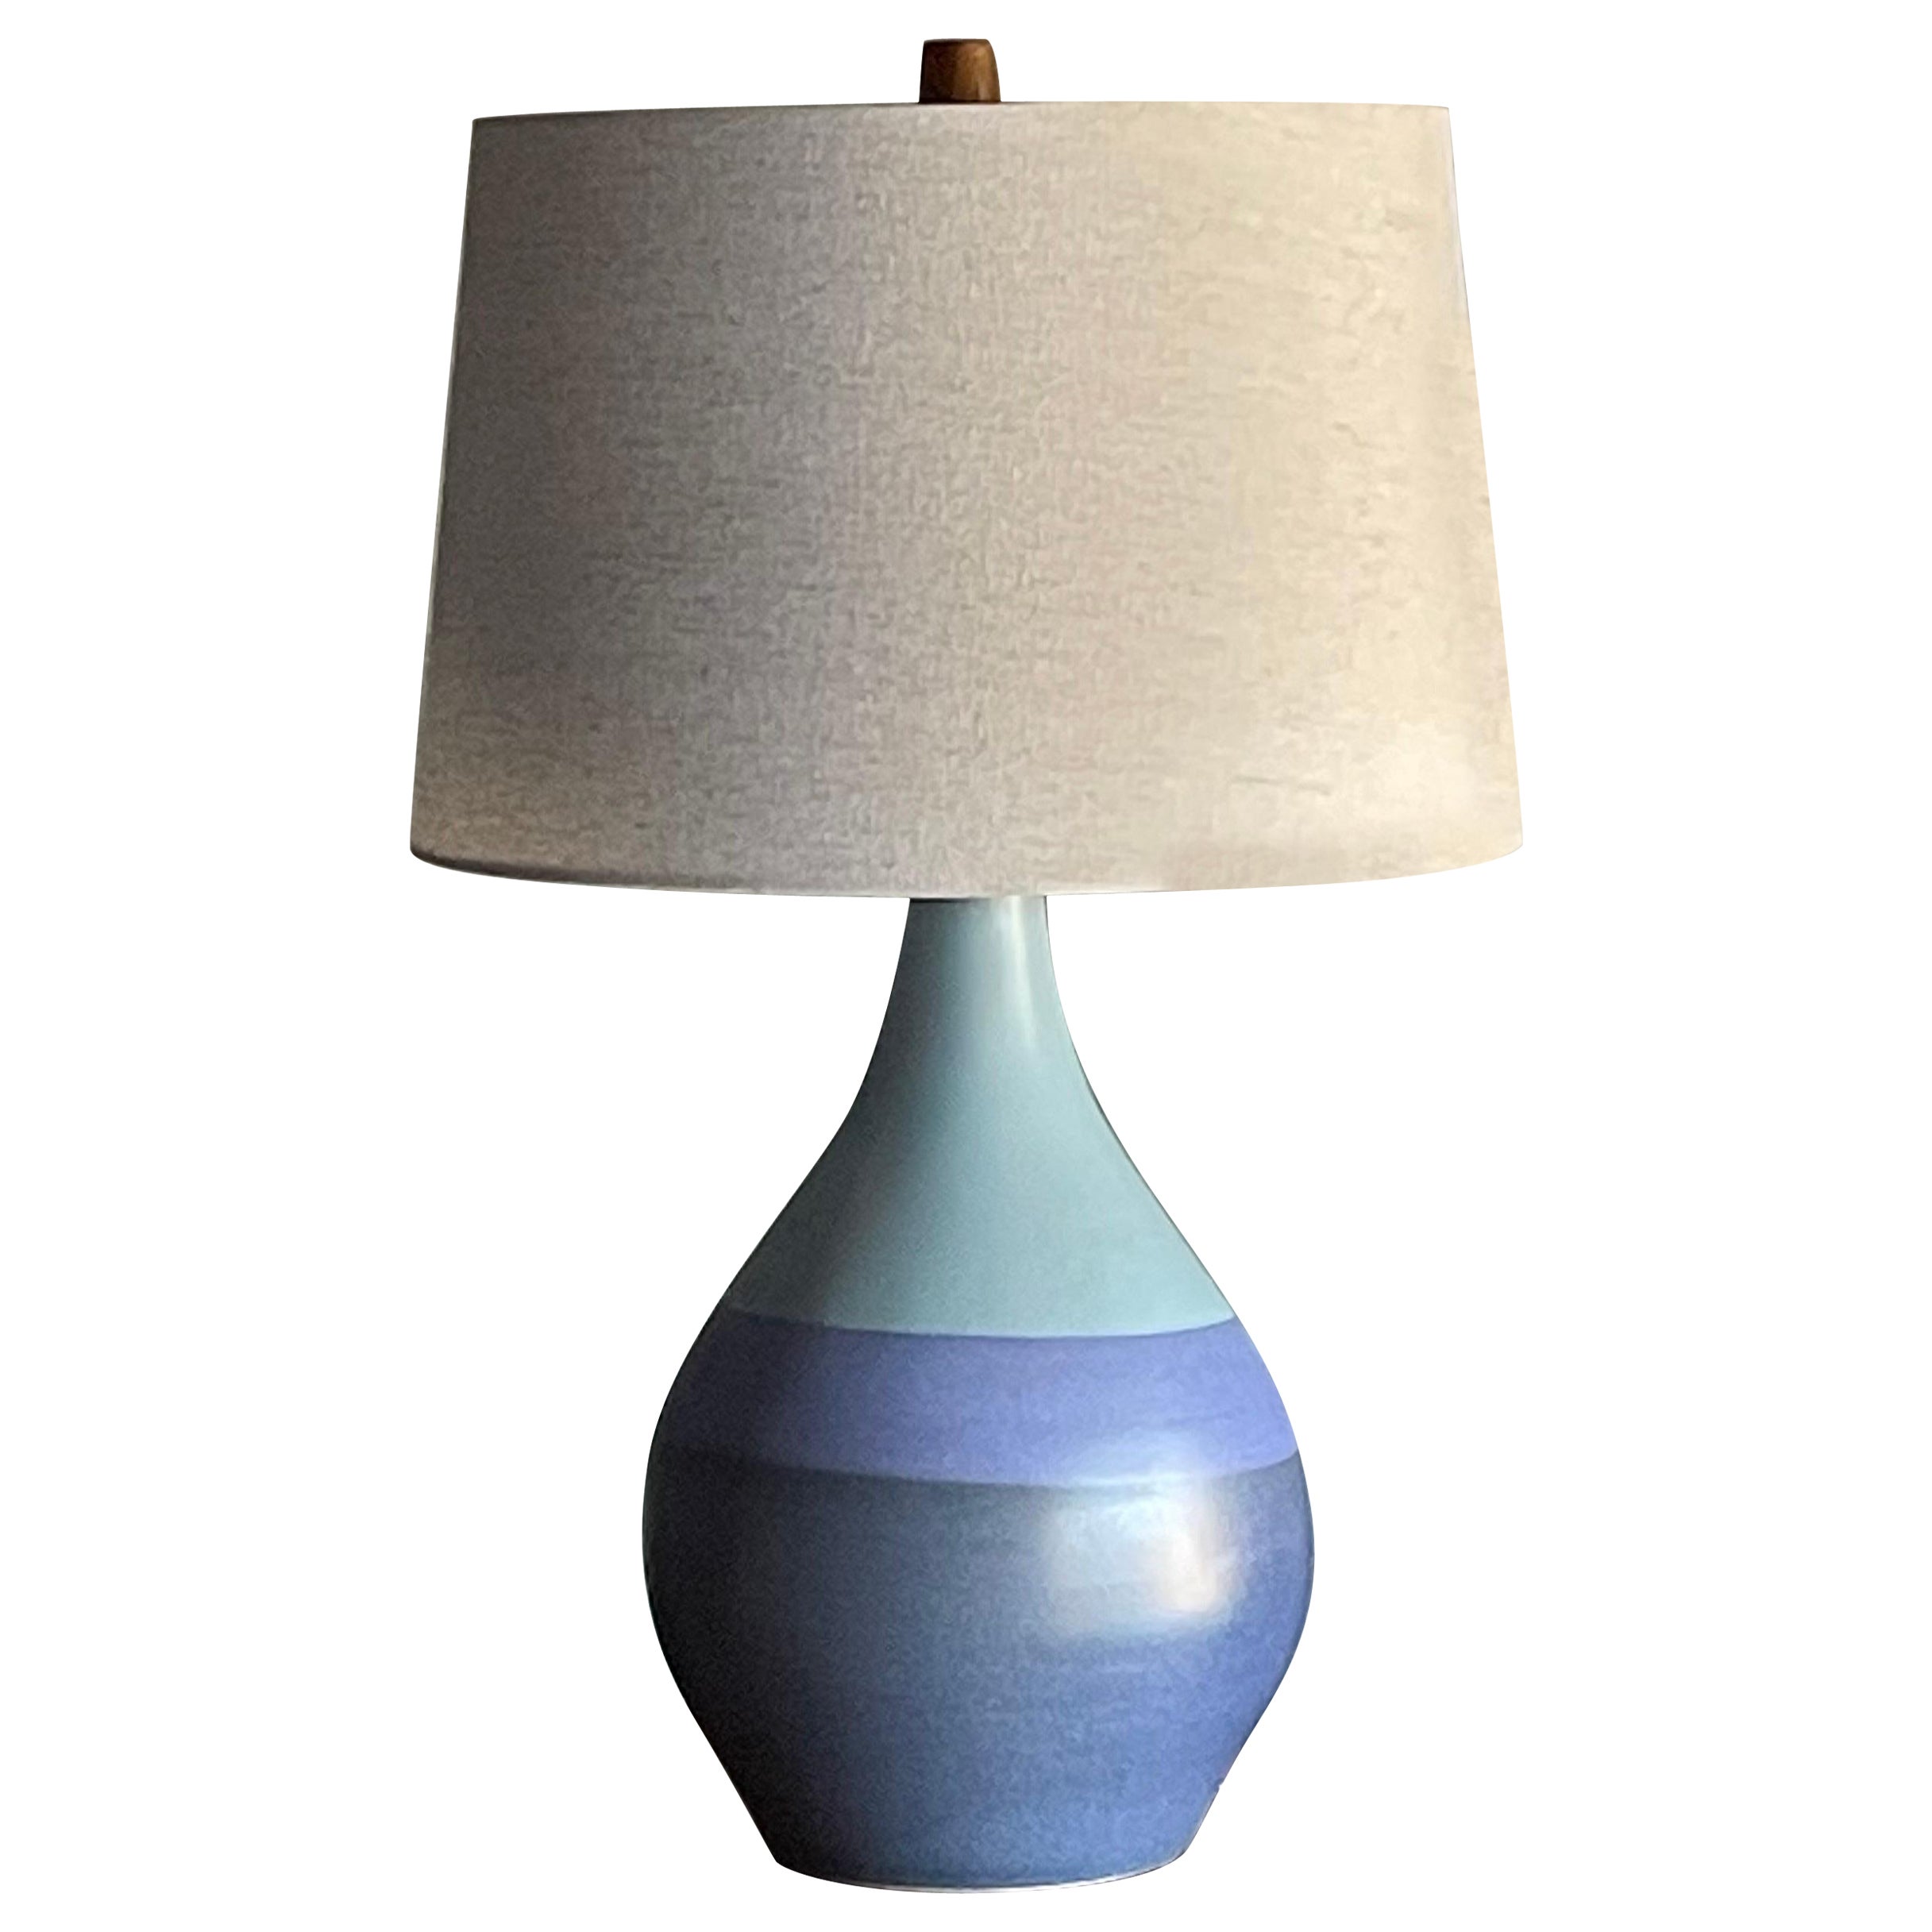 Jane and Gordon Martz Ceramic Table Lamp For Sale